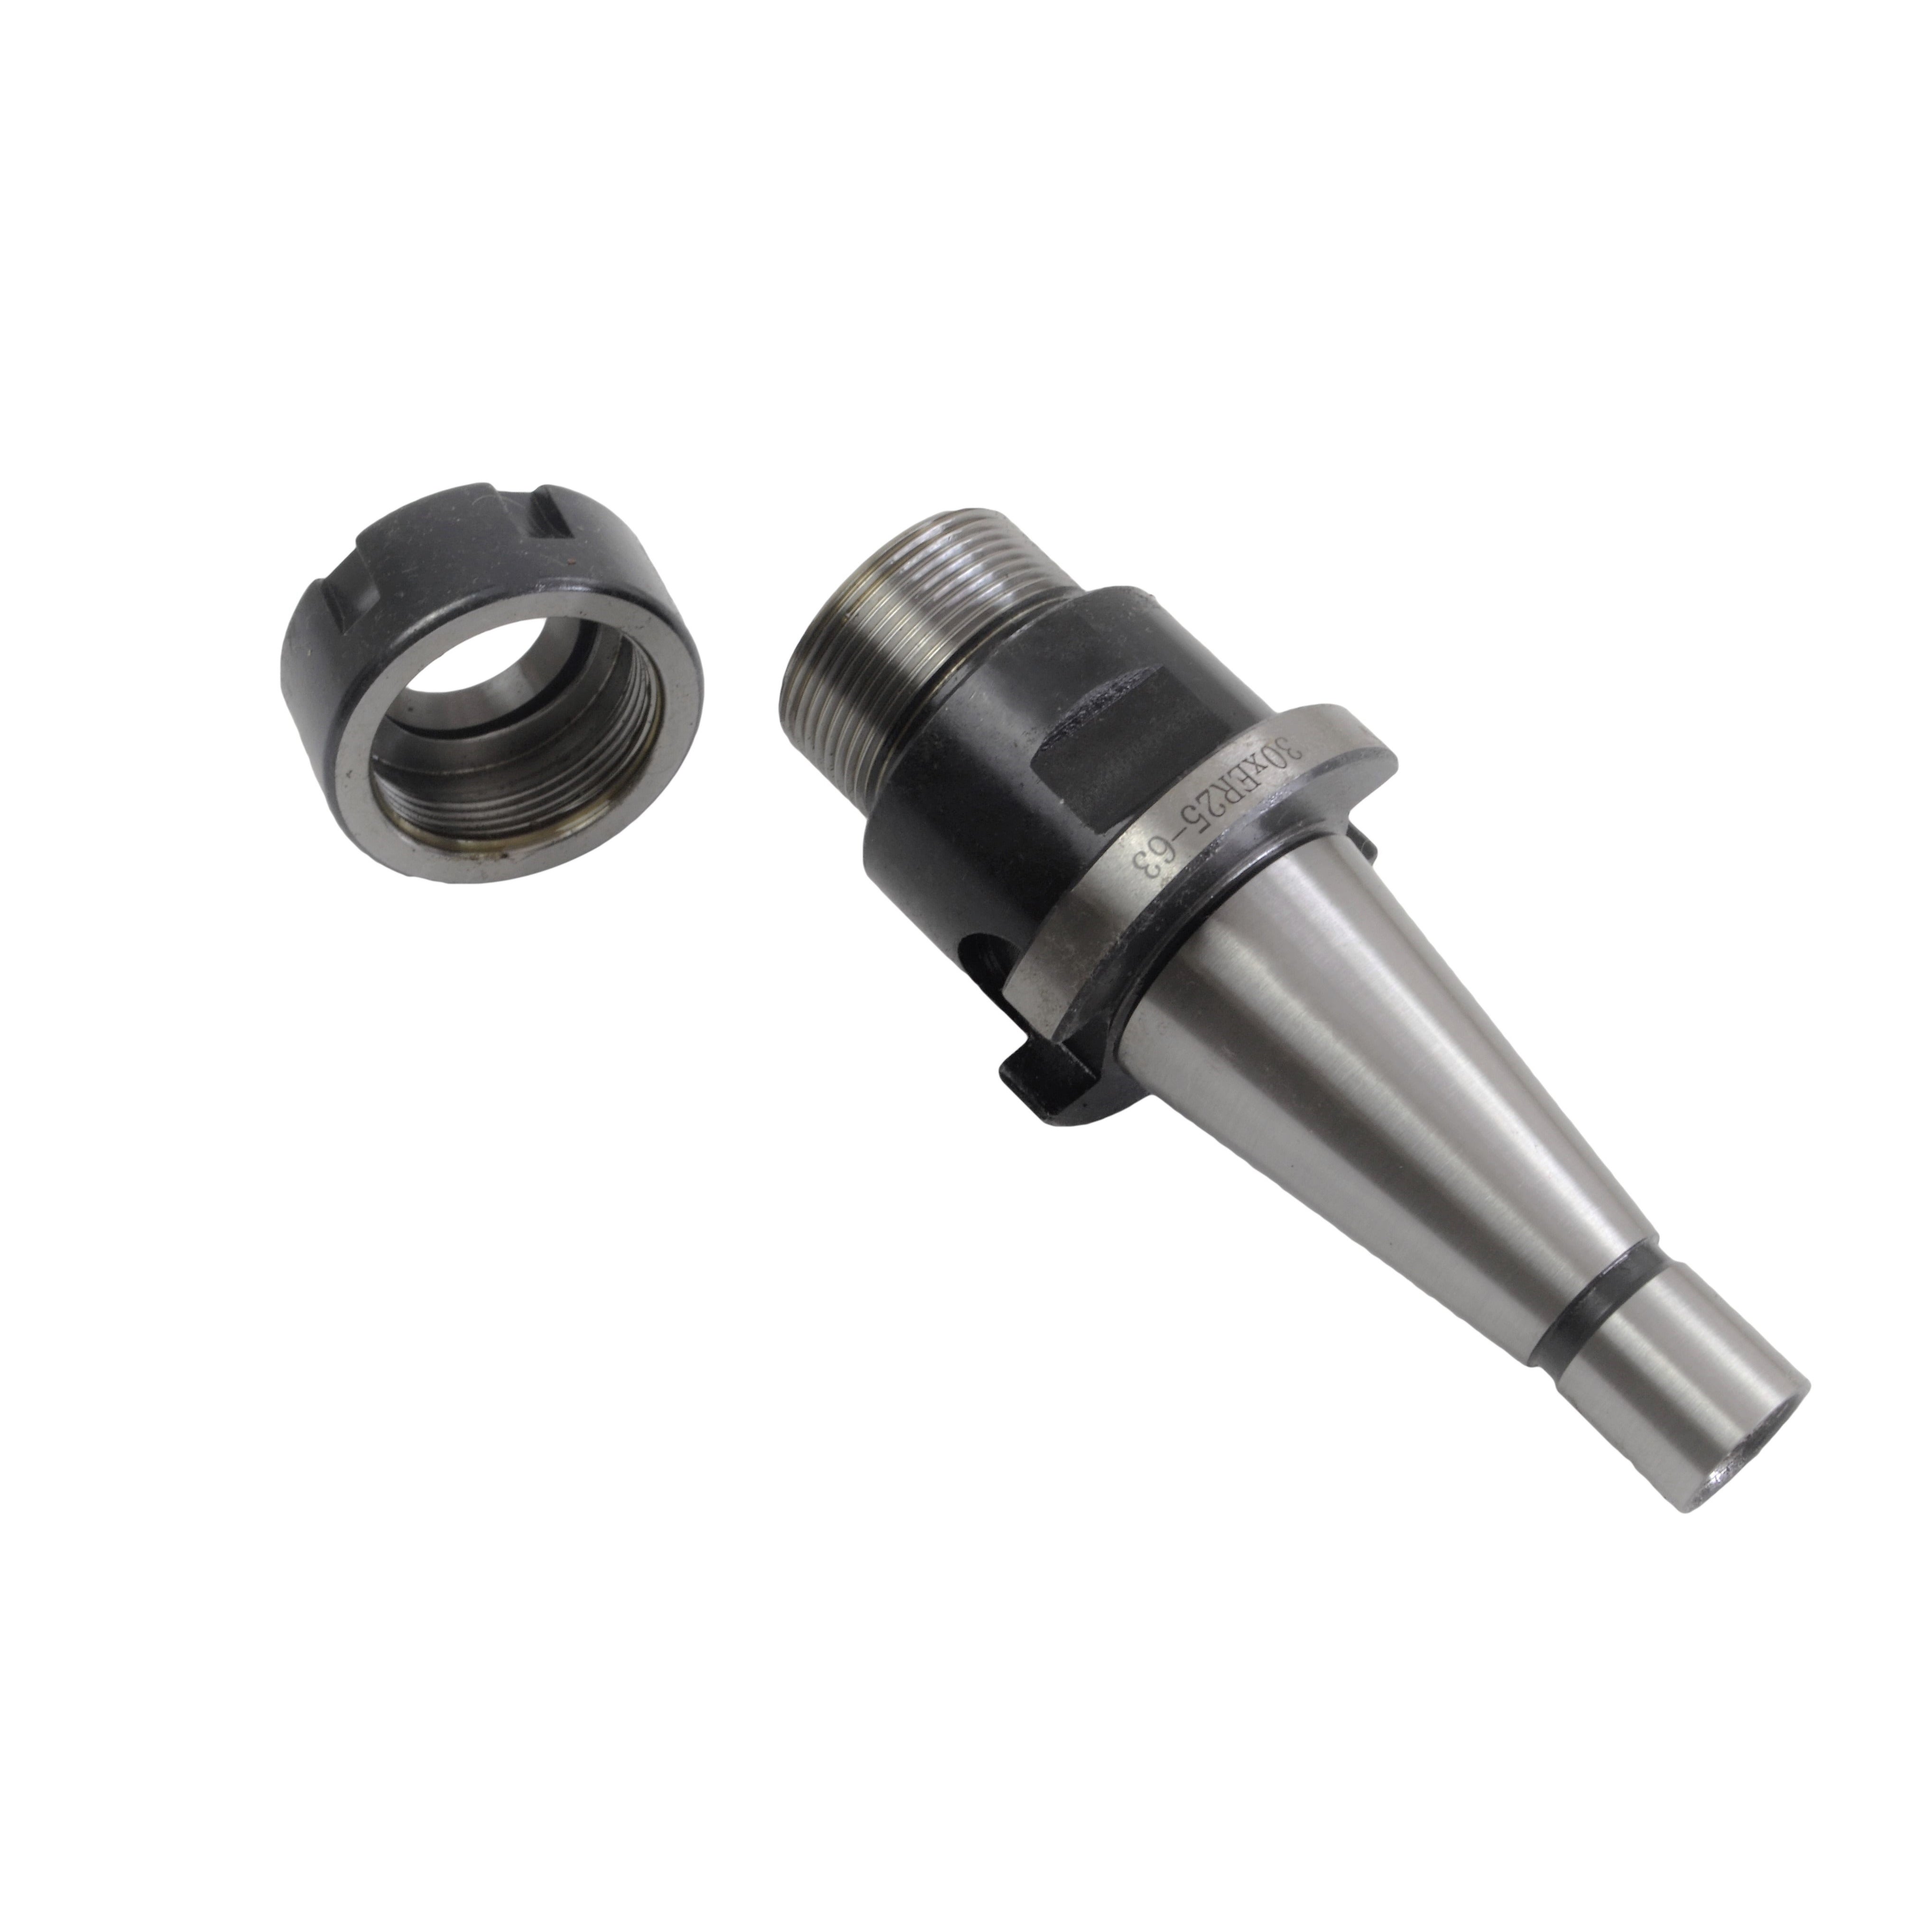 precision collet chuck ER25 ISO30 NT30 shank drawbar thread M12 cnc metal work manufacturing industrial supplies